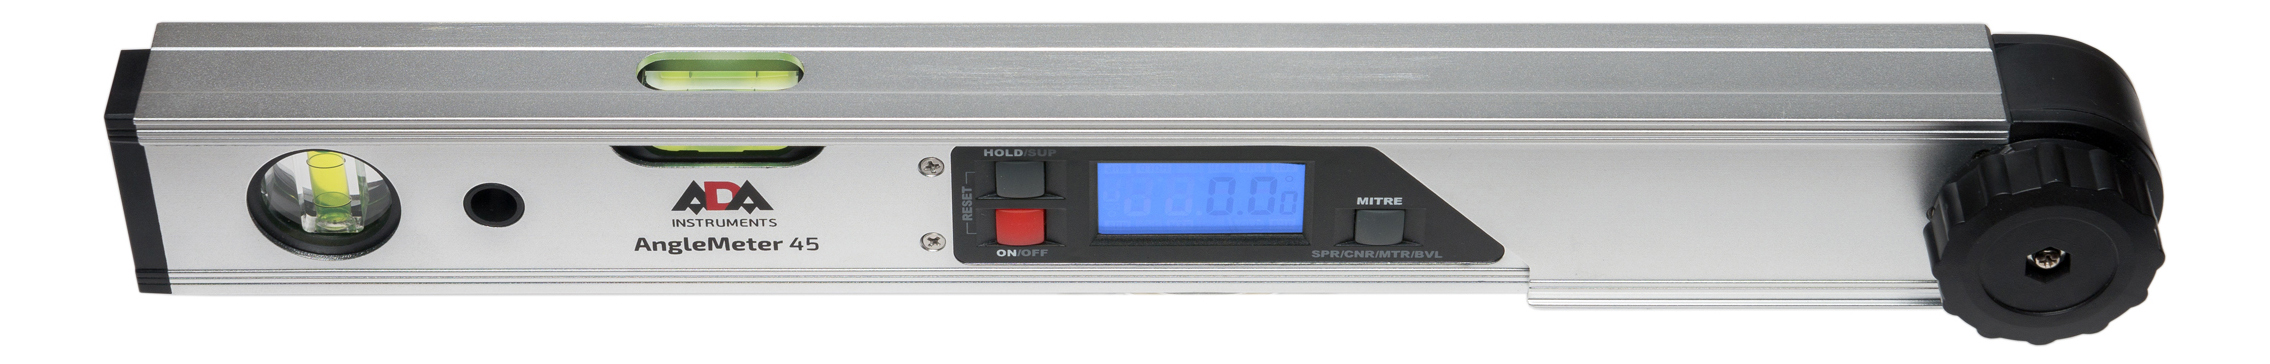 Угломер электронный ADA AngleMeter 45 угломер электронный ada anglemeter 45